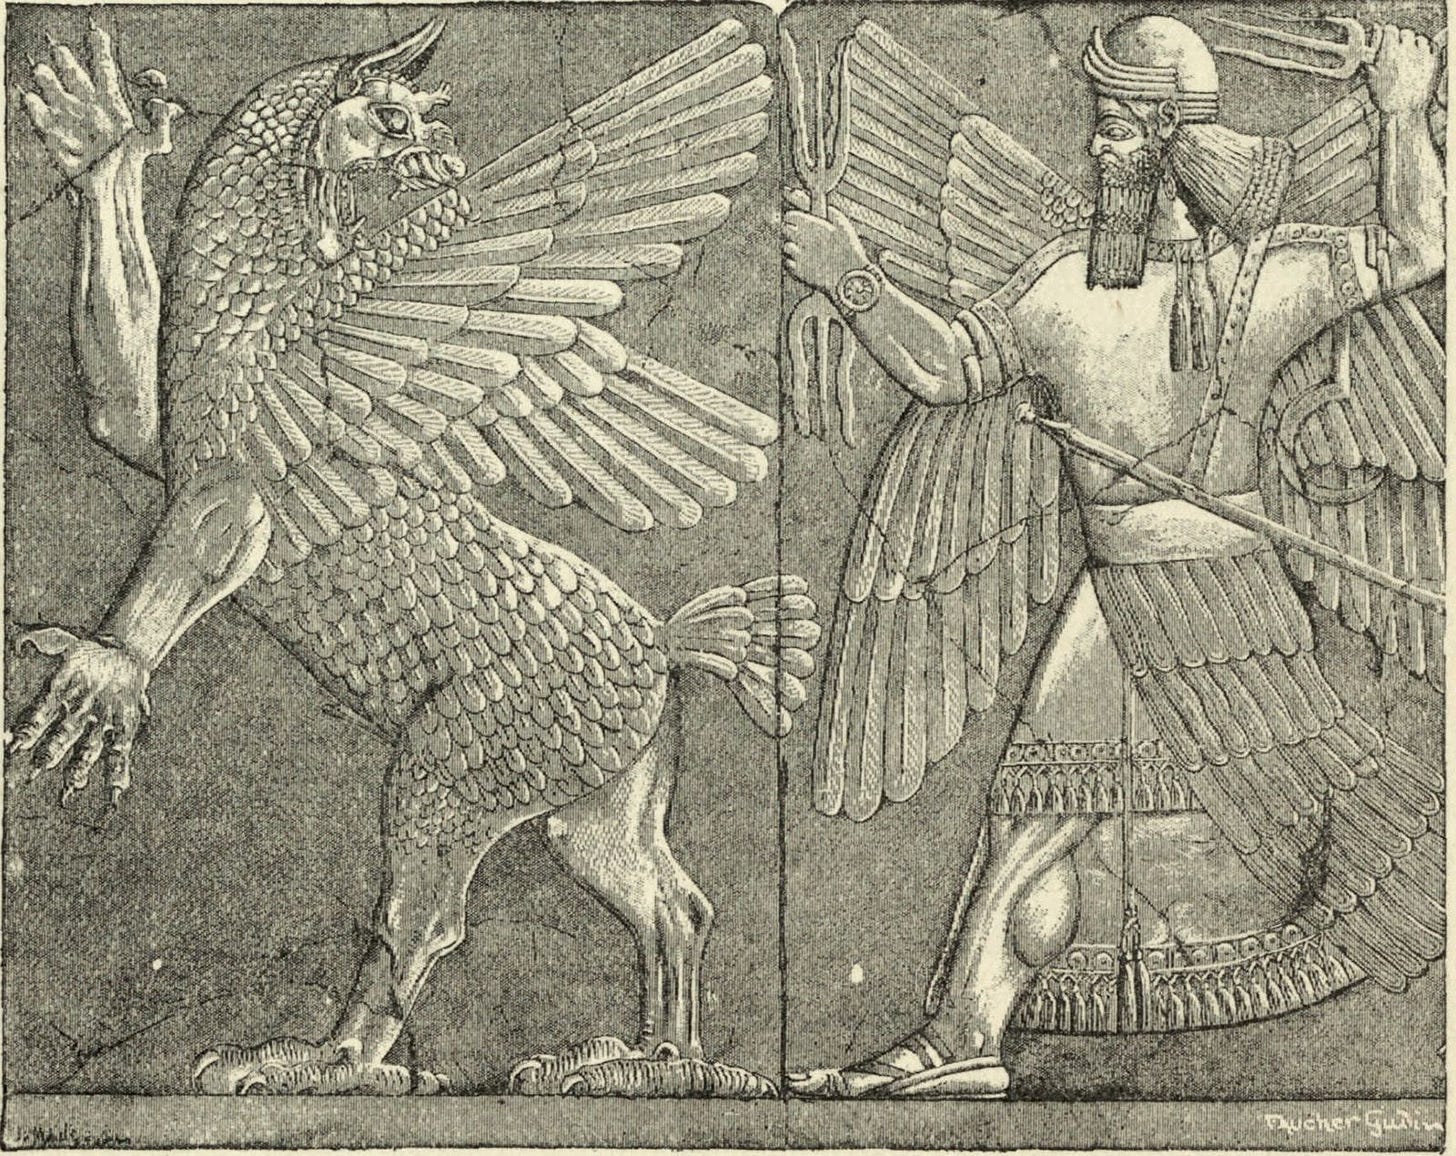 Tiamat | Goddess, Dragon, Mythology, & Popular Culture | Britannica